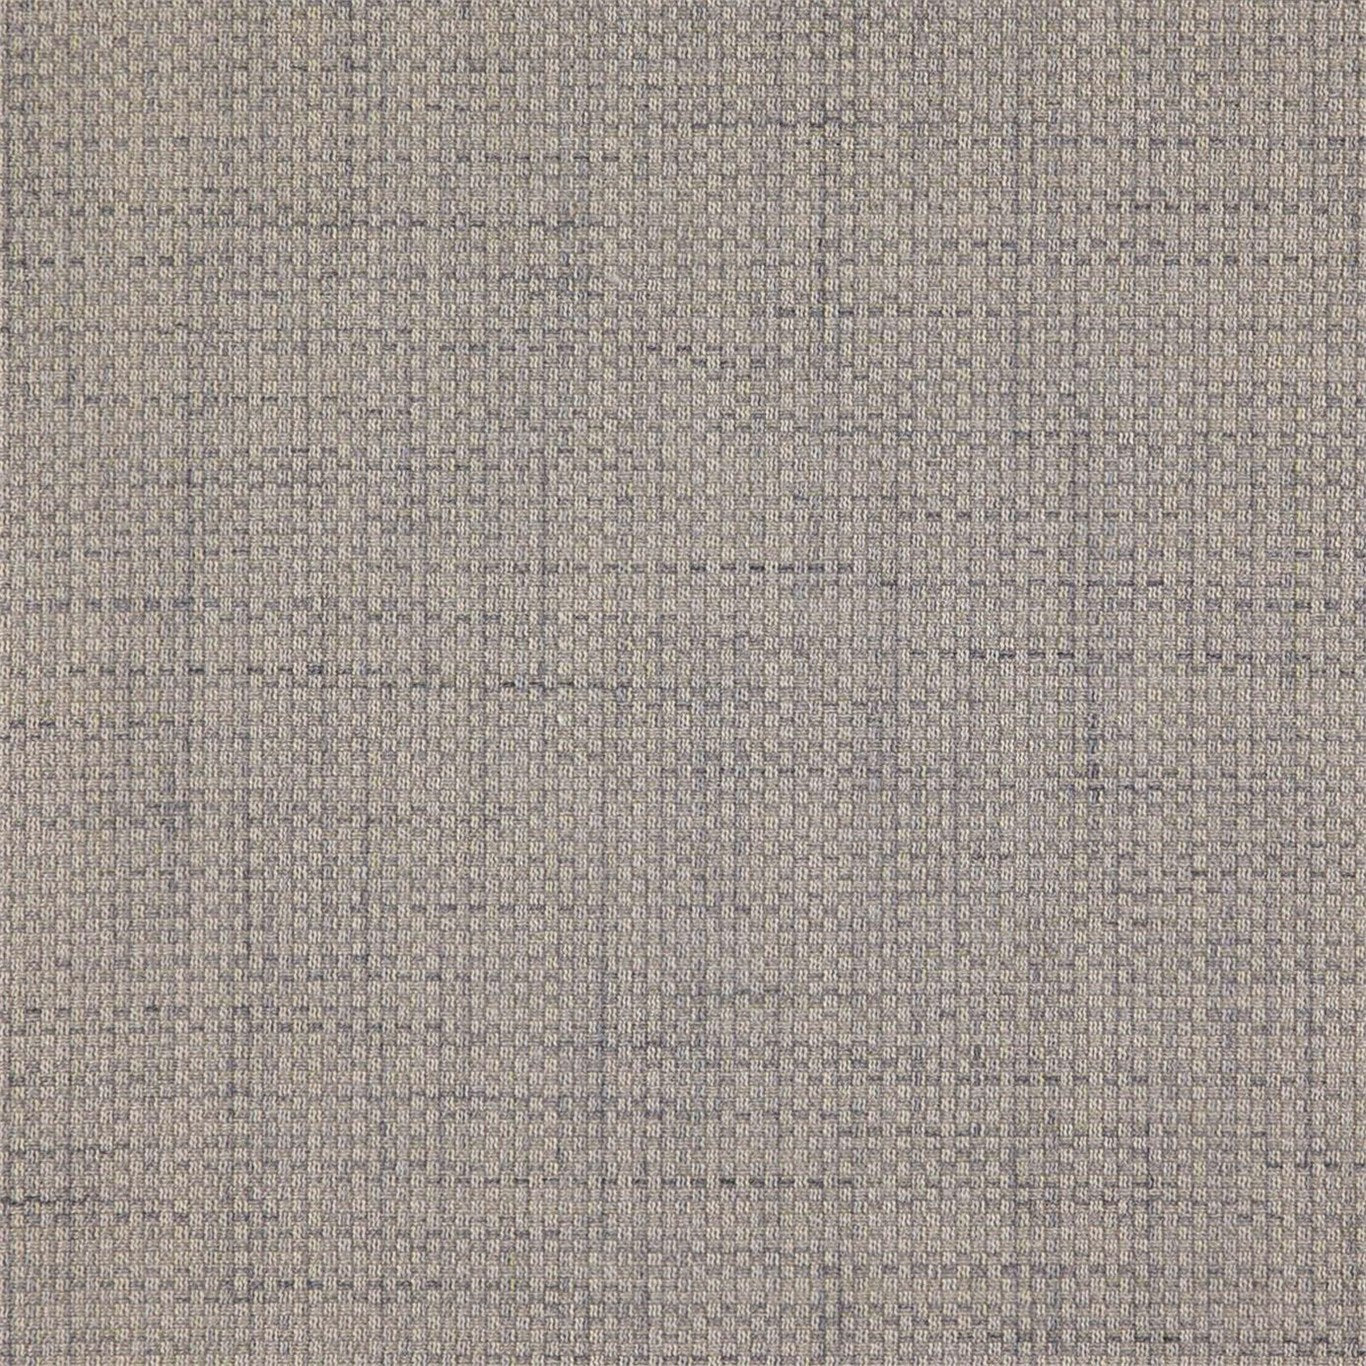 Bradenham Fabric by Sanderson - DASH235655 - Silver